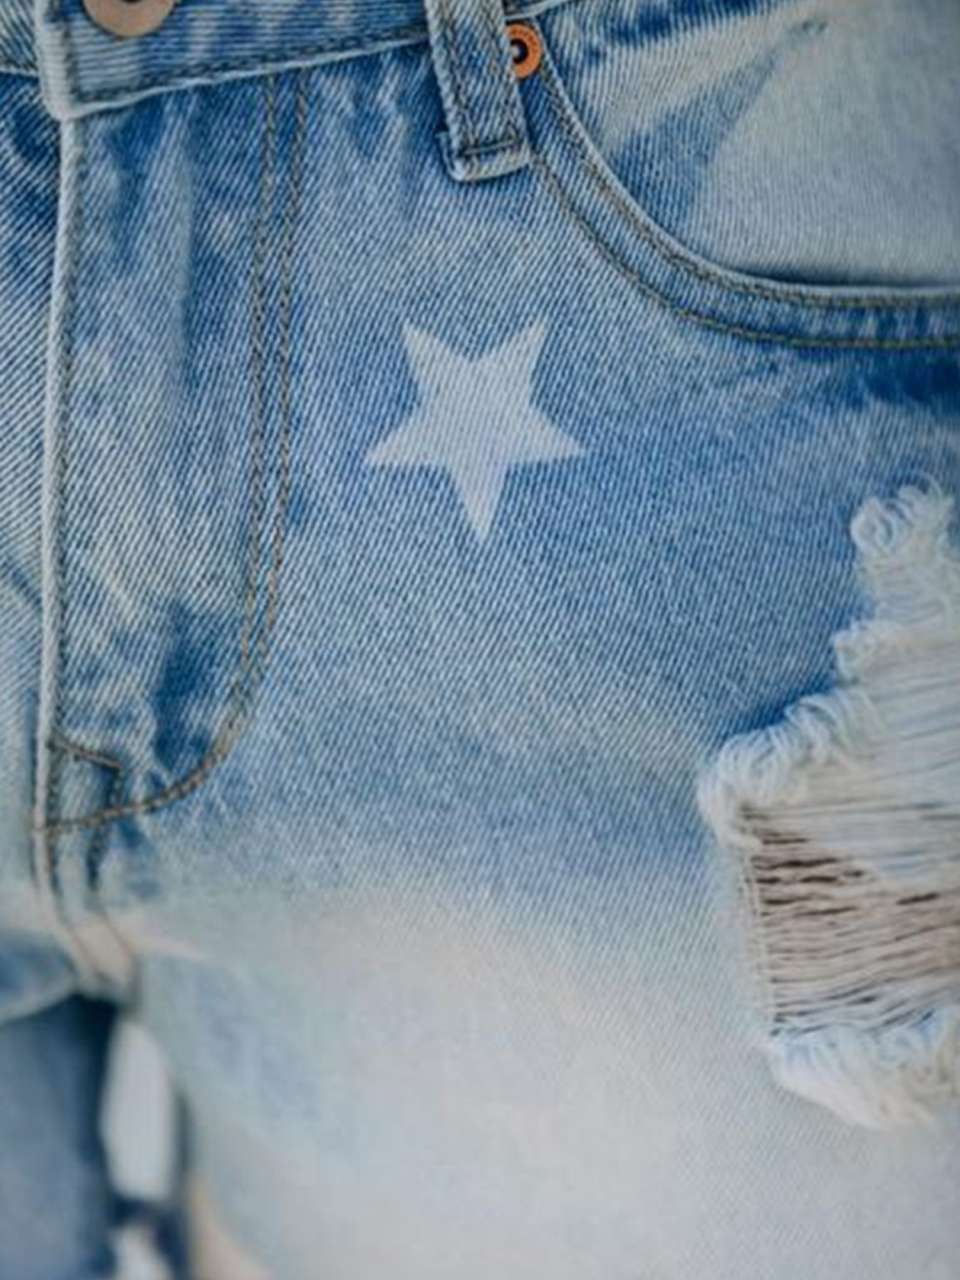 Women's Denim Shorts Pentagram Print Ripped Frayed Shorts